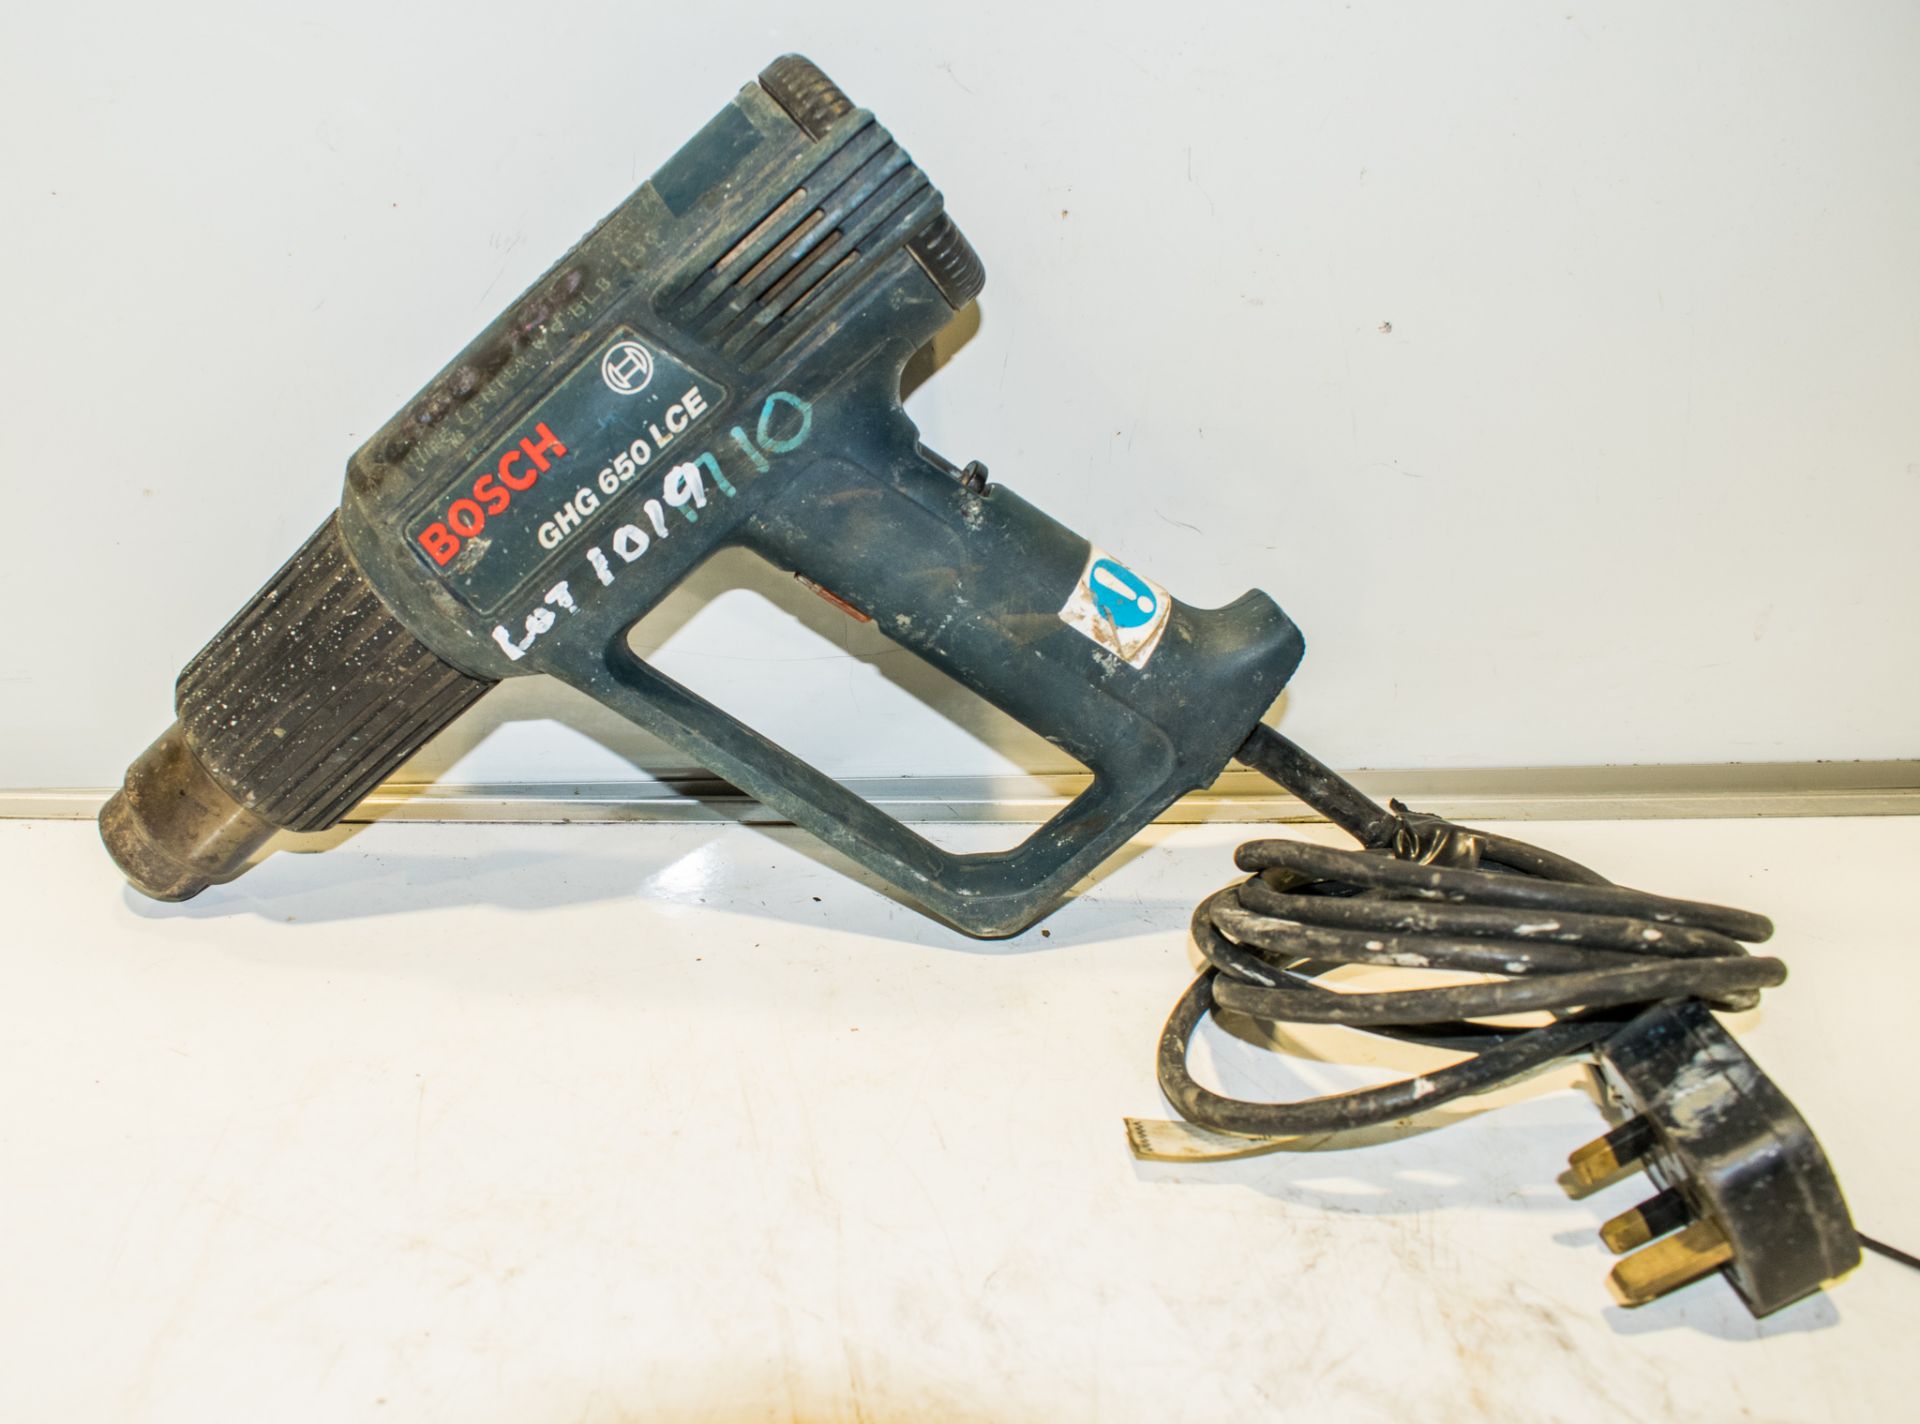 Bosch 240v heat gun c/w carry case